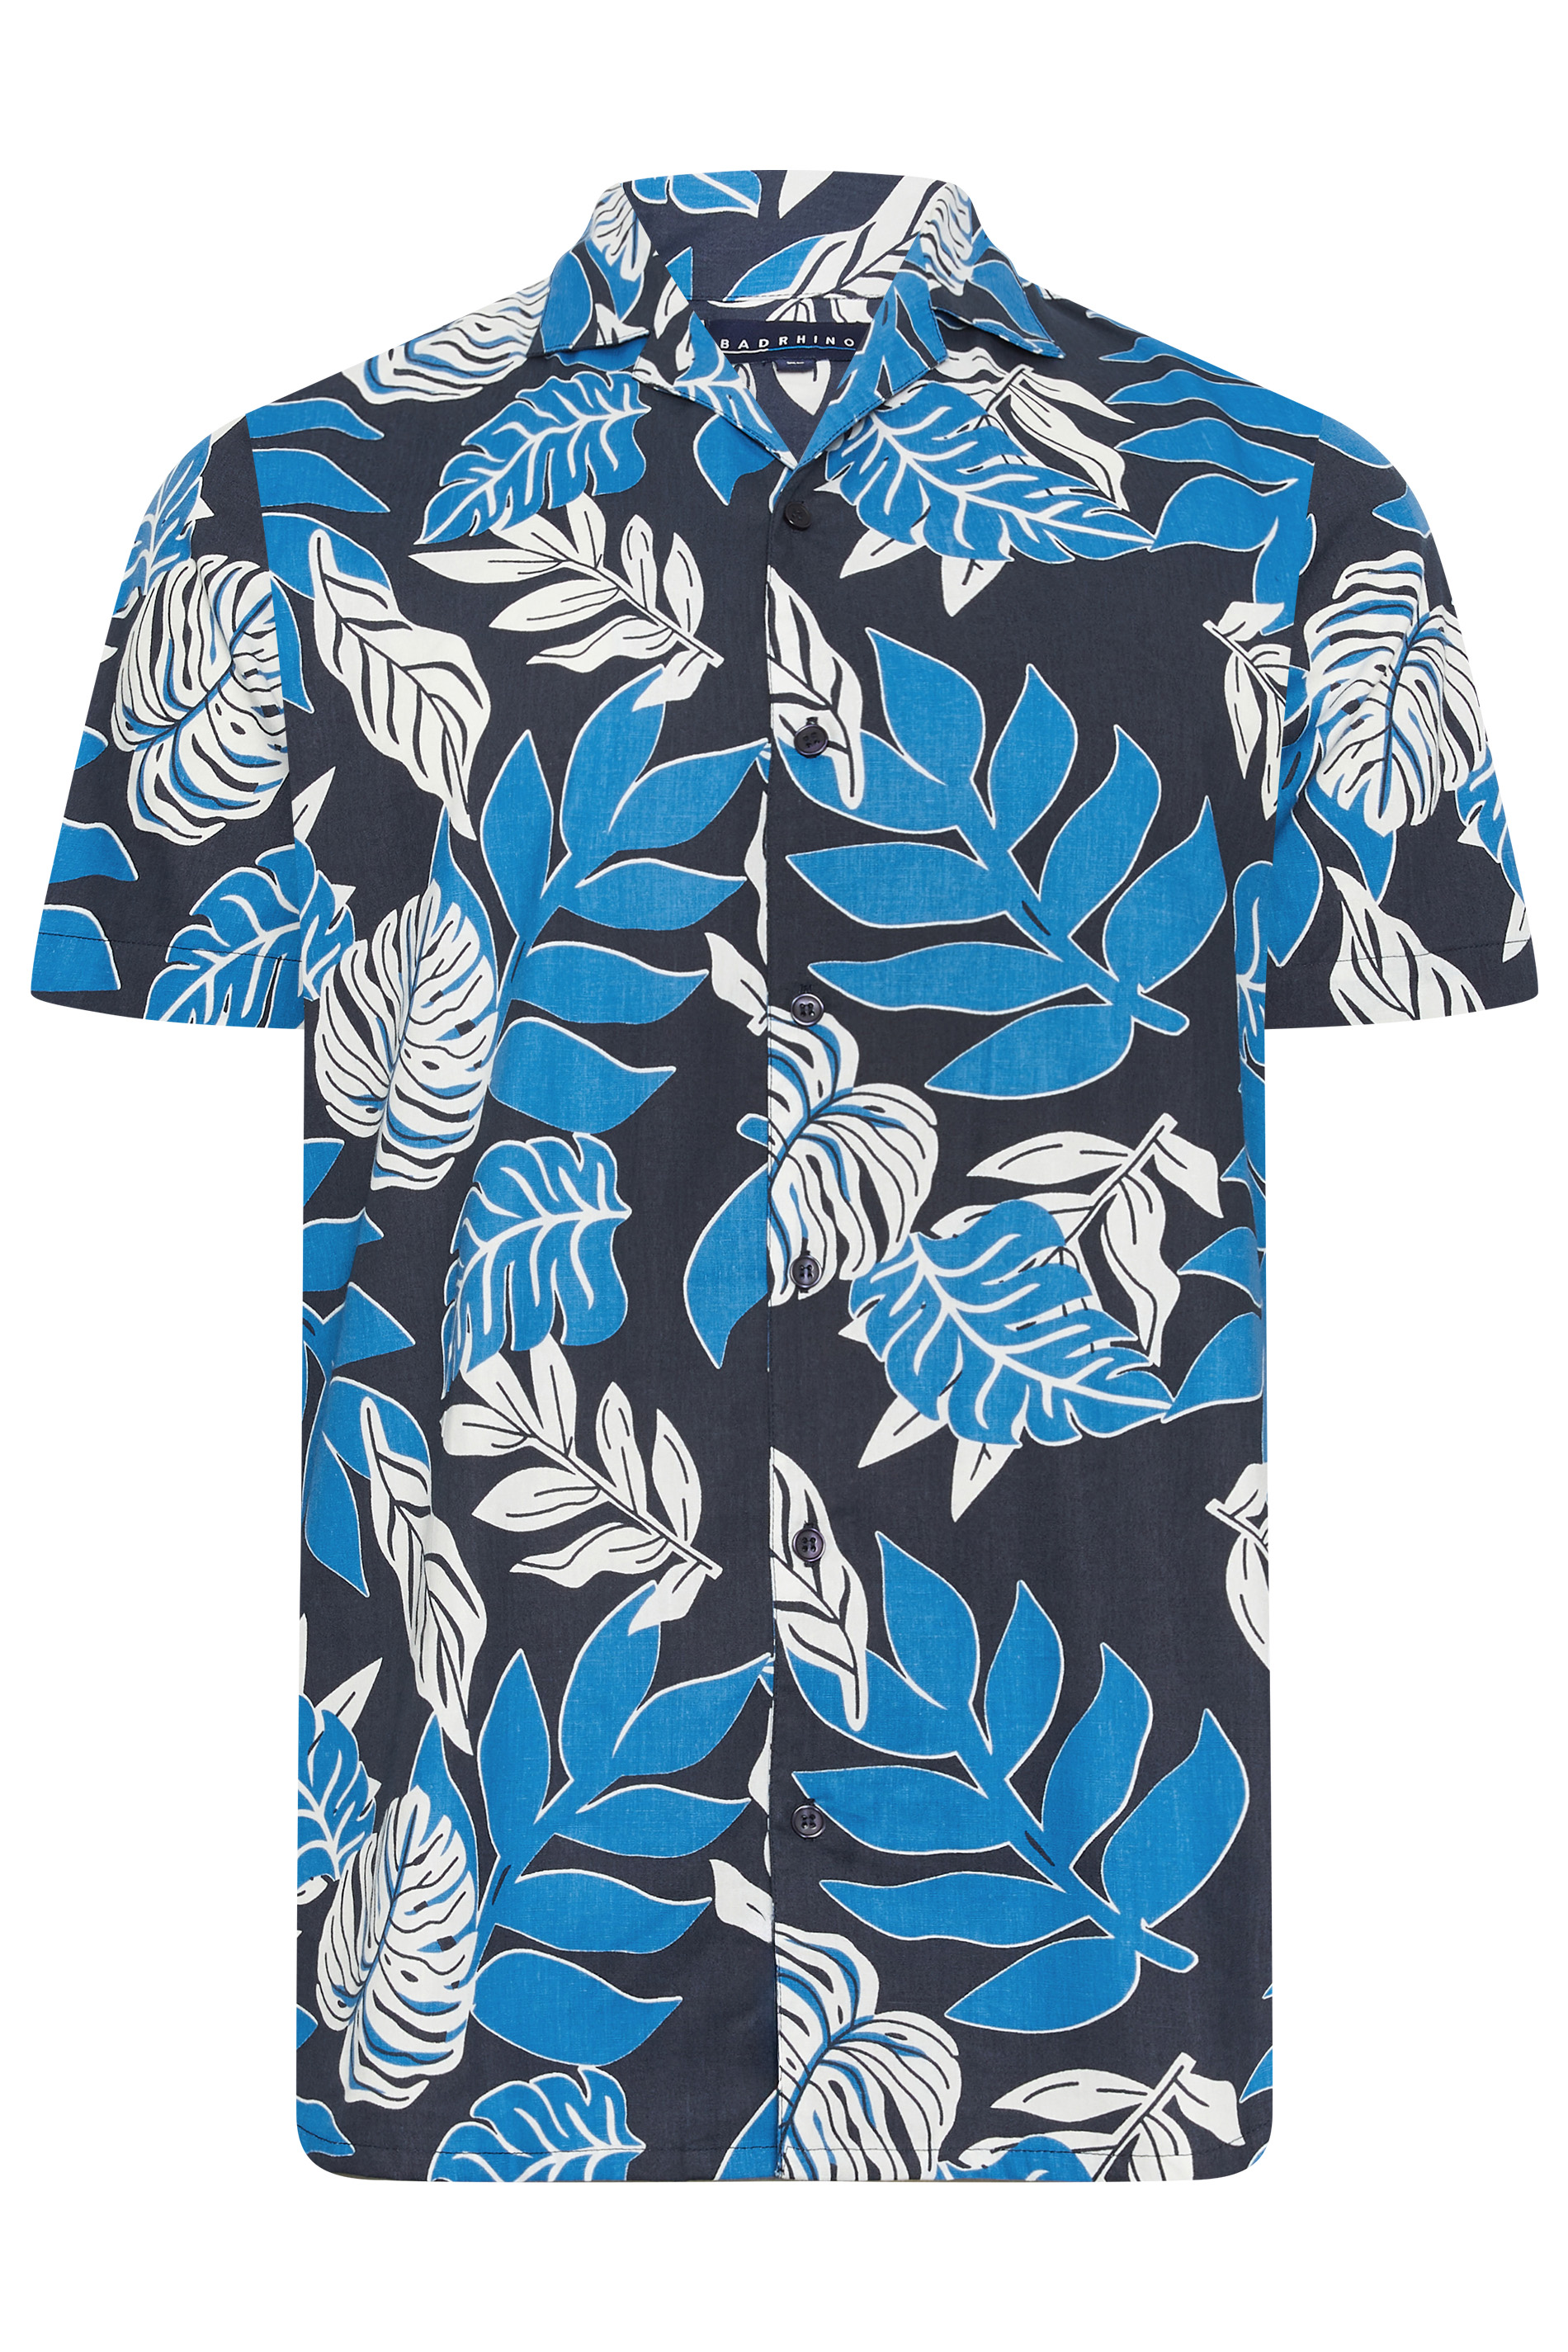 BadRhino Big & Tall Navy Blue Leaf Print Shirt | BadRhino 2